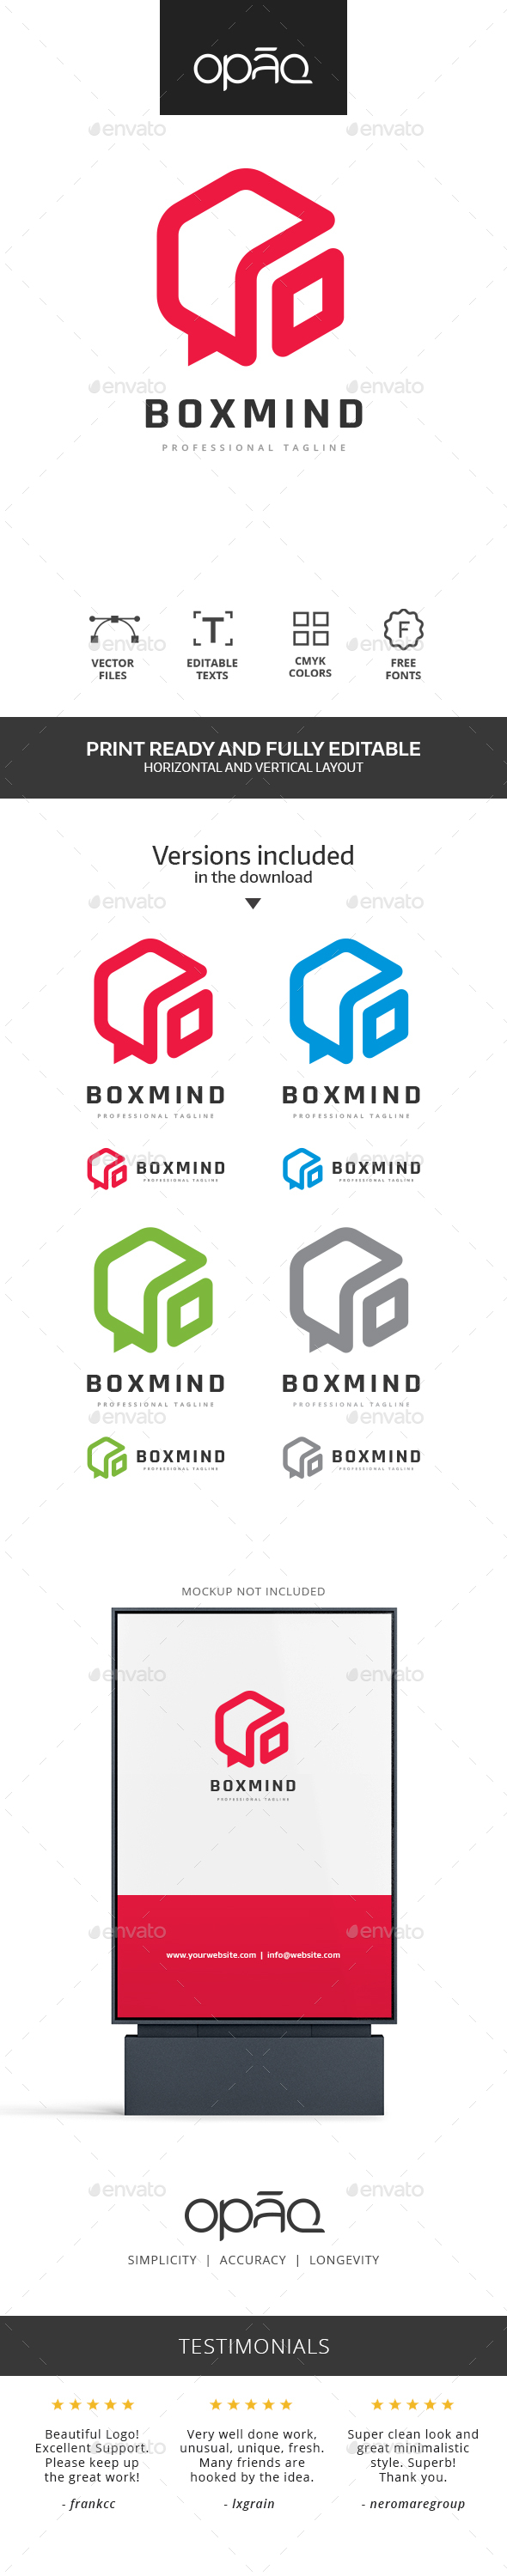 Box Mind Communication Logo